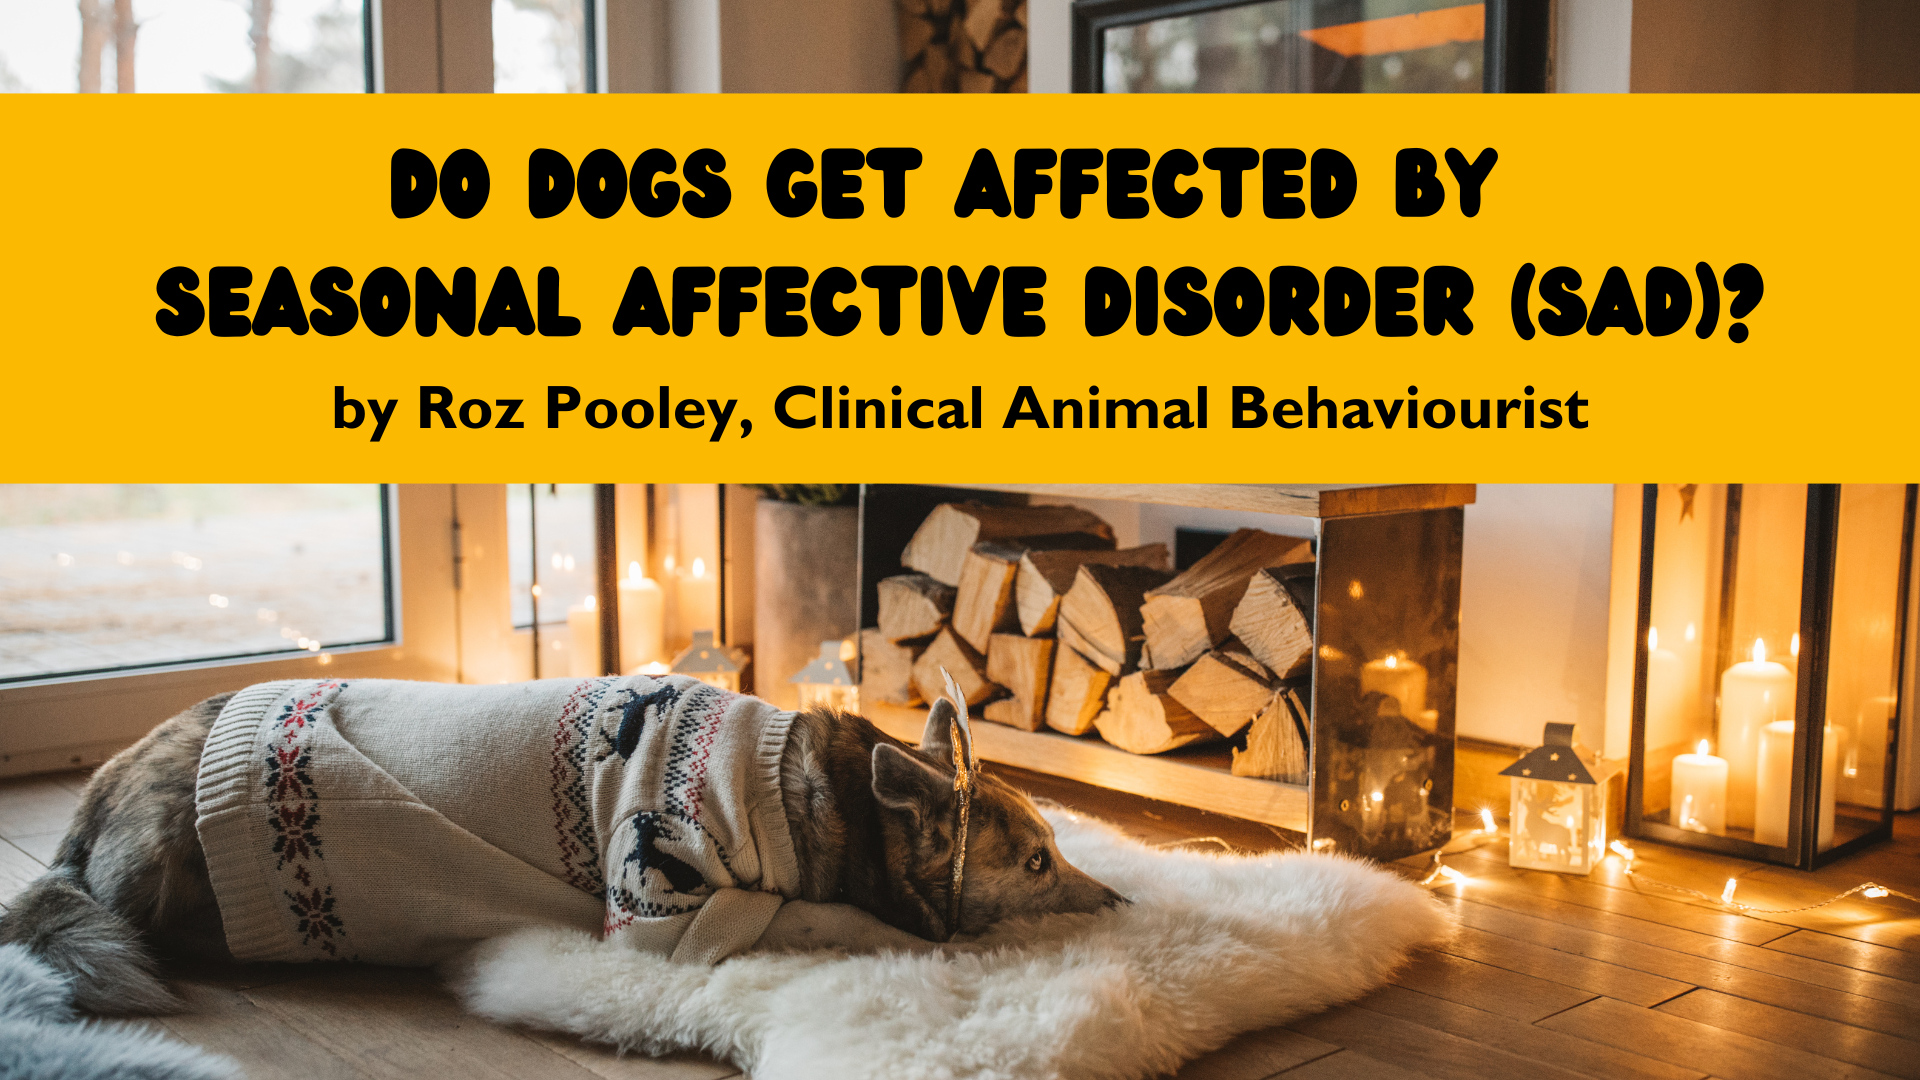 Do dogs get Seasonal Affective Disorder?